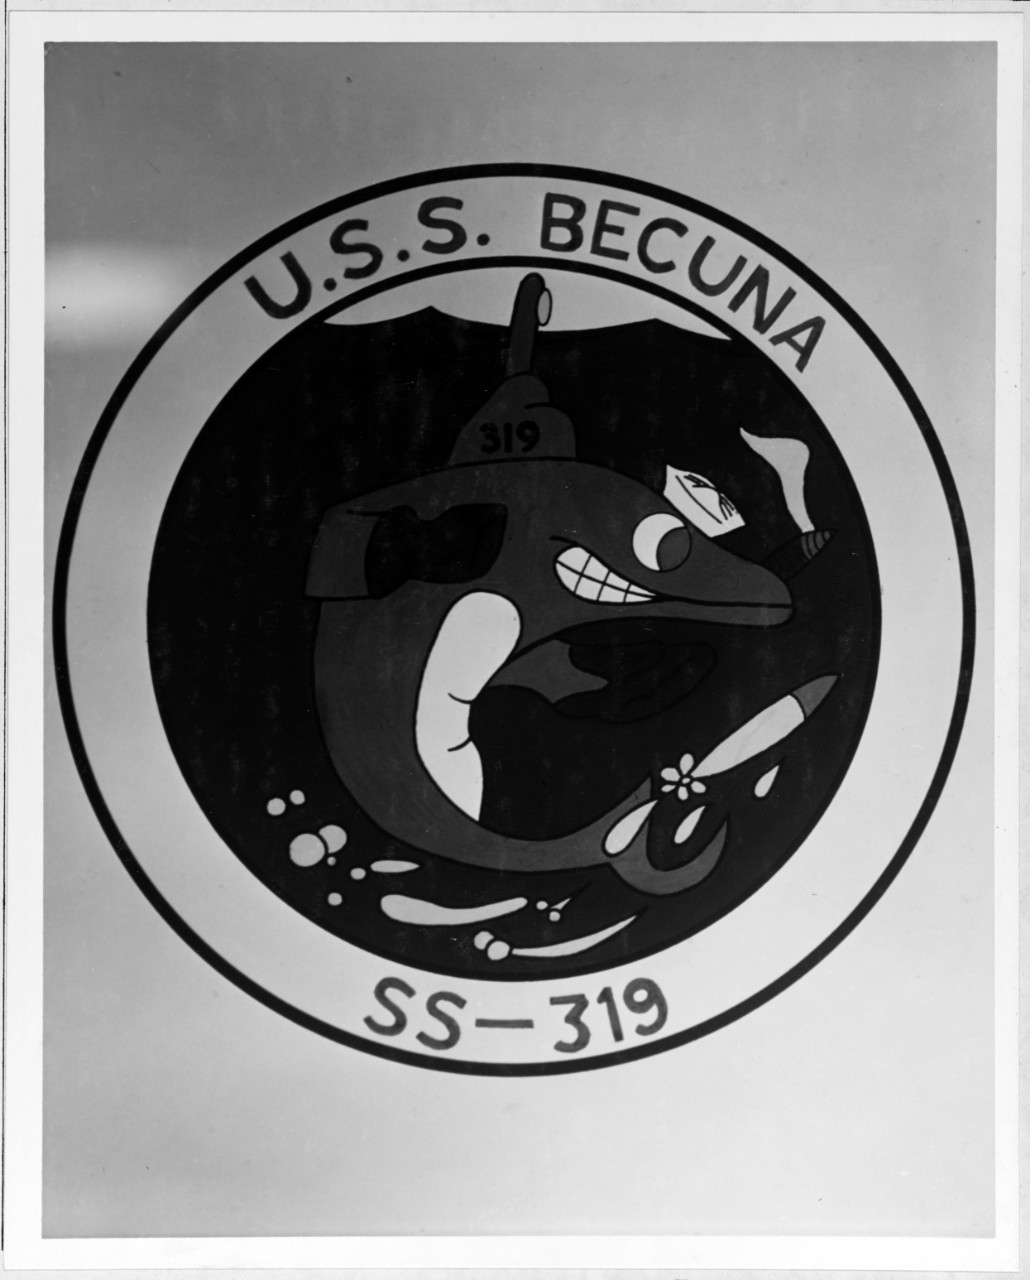 Insignia:  USS BECUNA (SS-319)